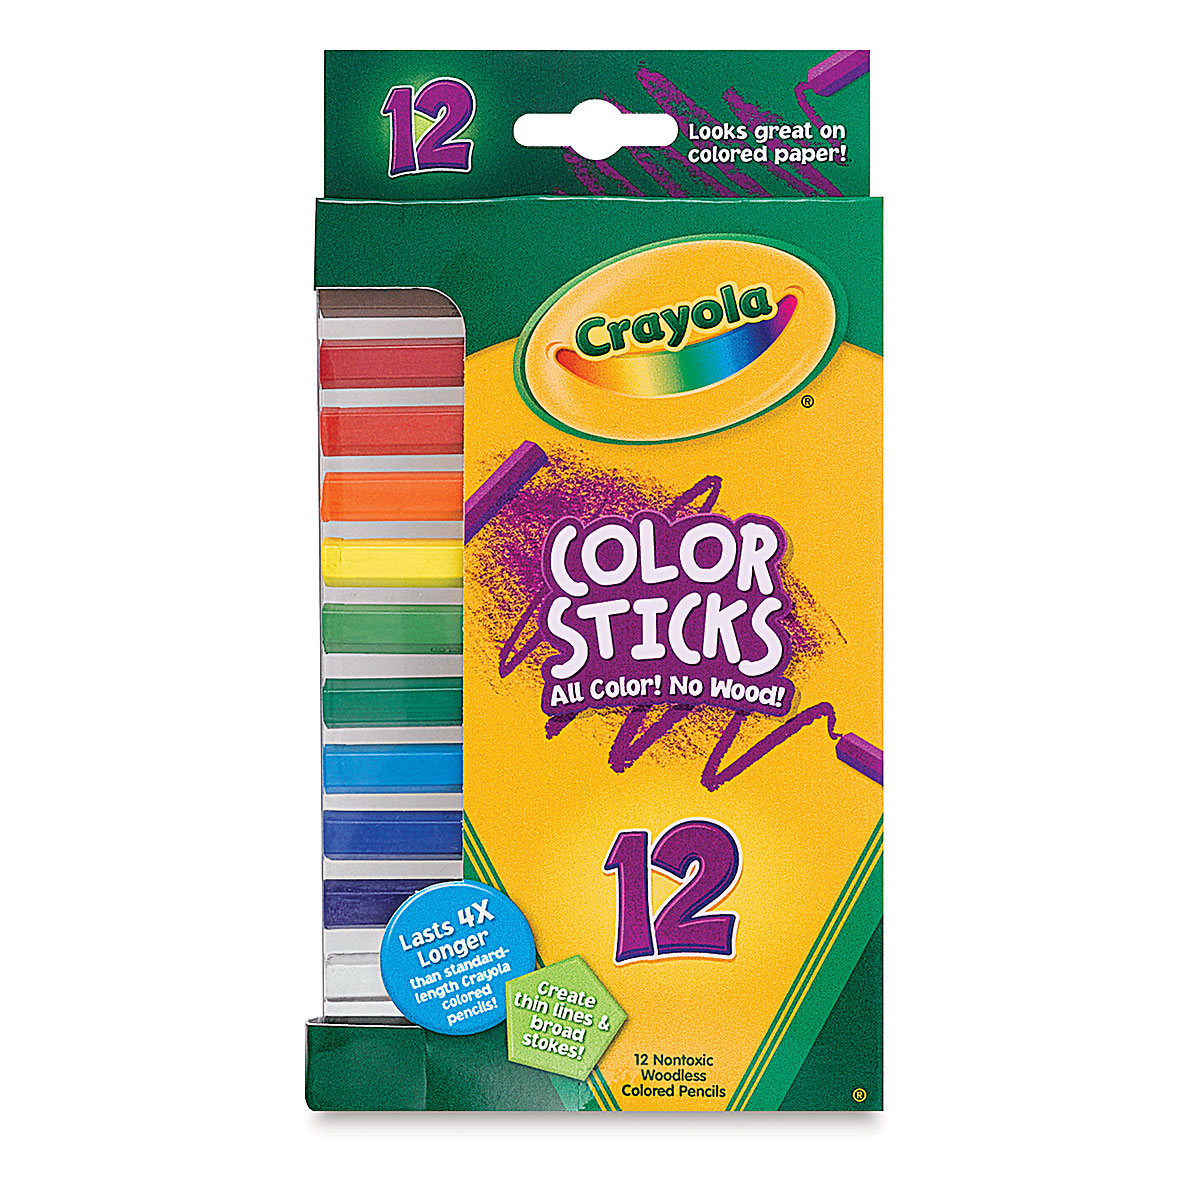 Red-orange Crayola Colored Pencils Set of 5 or 10 With Sharpener